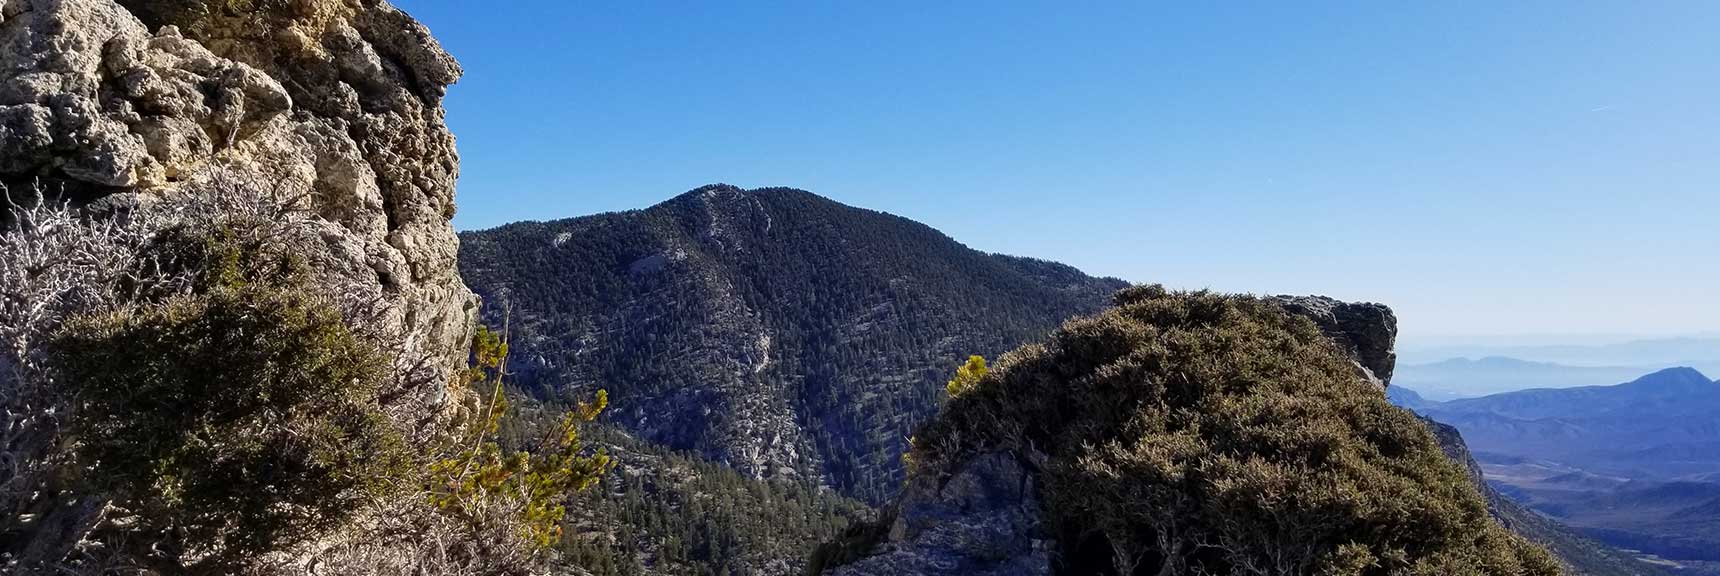 Fletcher Peak Viewed from Cockscomb Ridge in Mt. Charleston Wilderness, Nevada